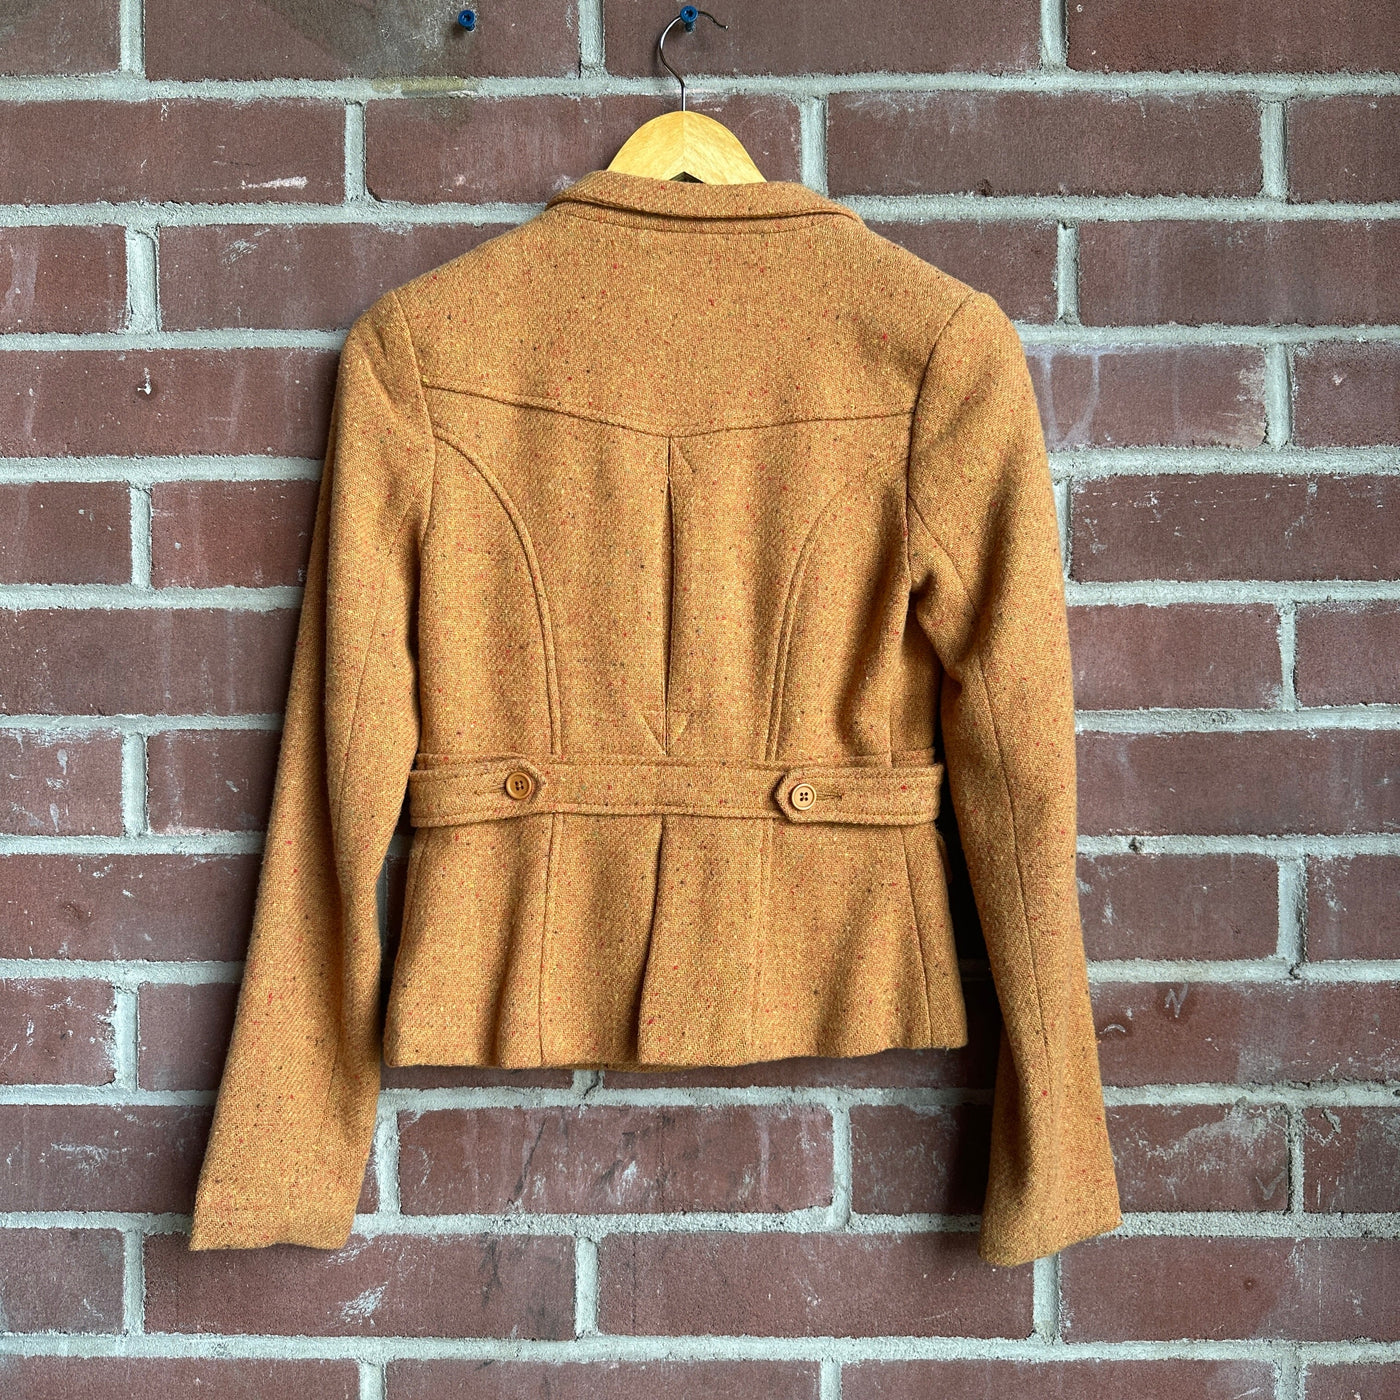 90s/00s Orange Wool “Fossil” Coat